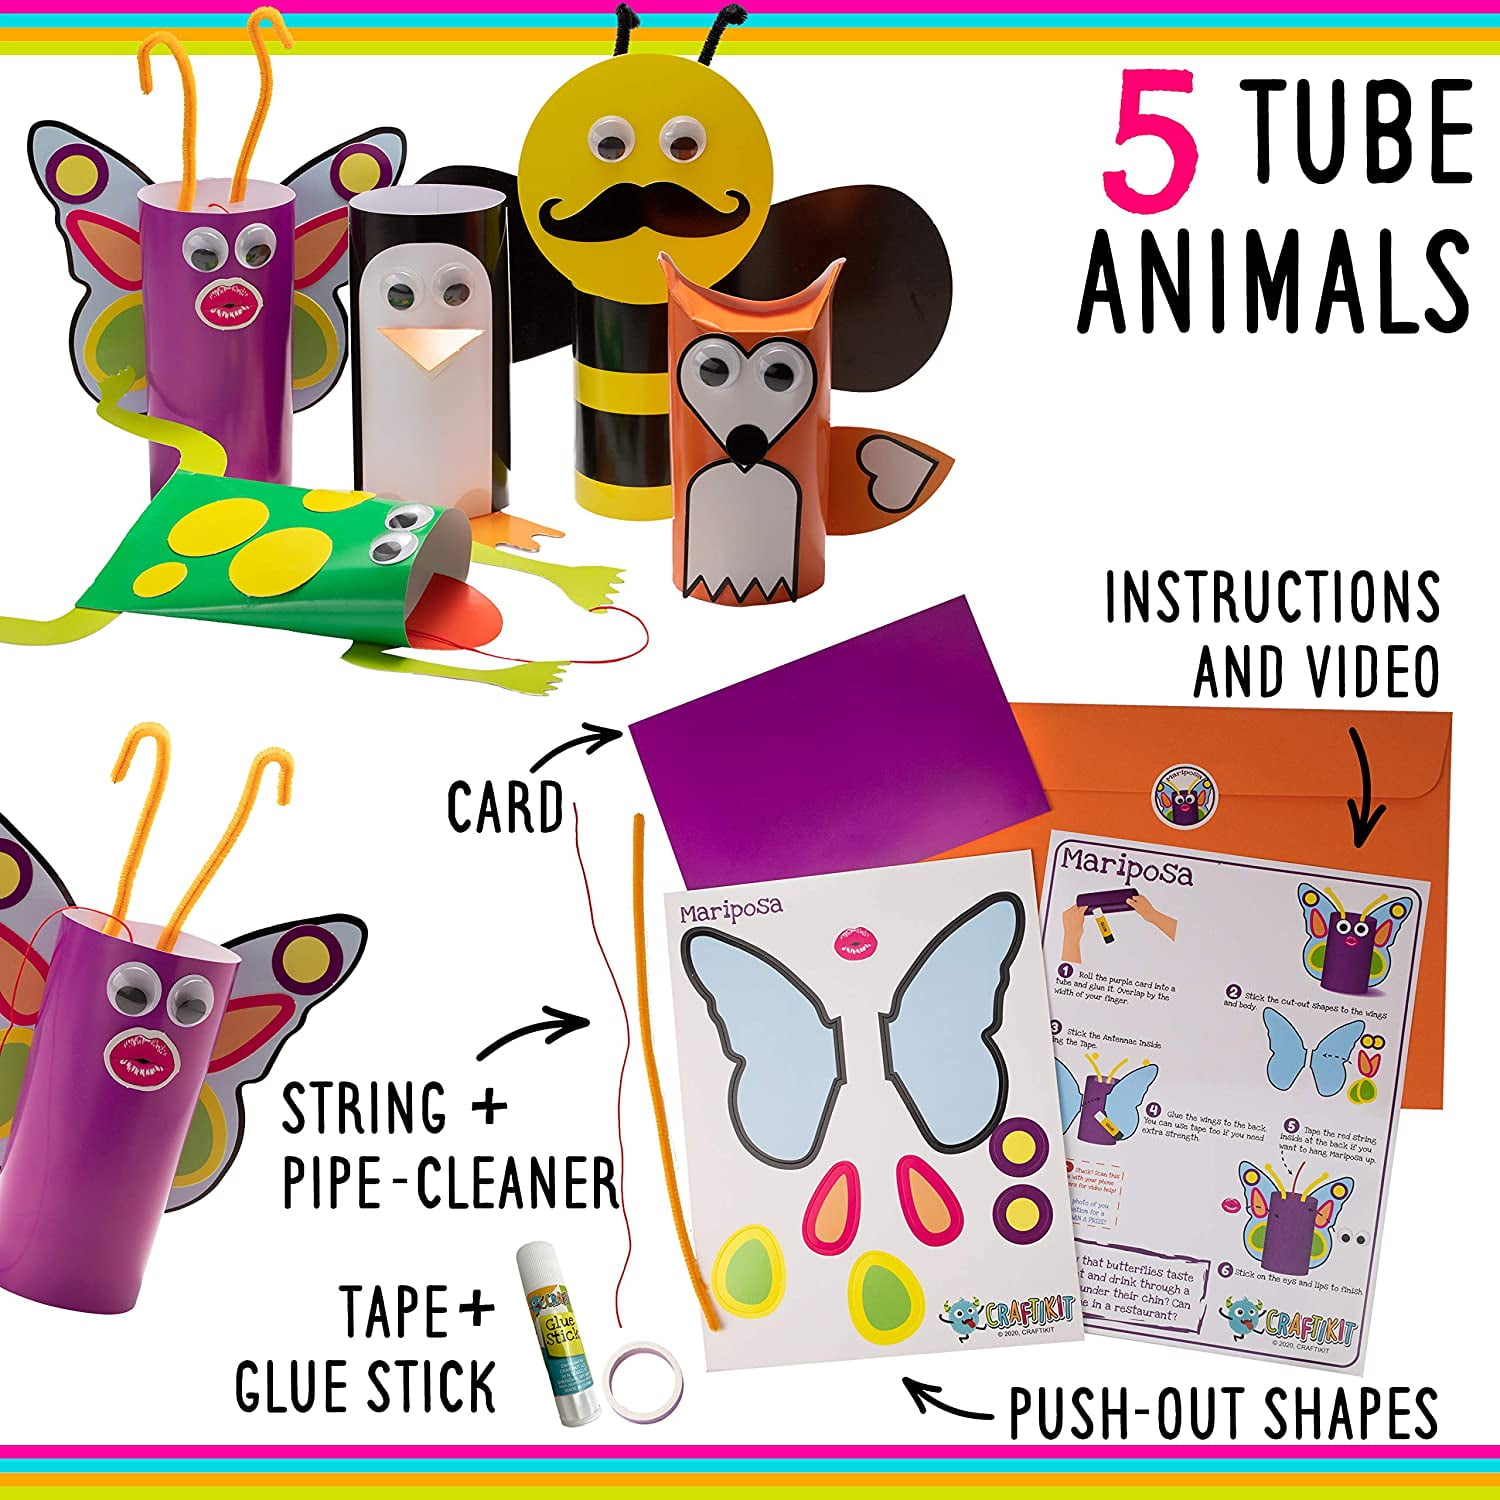 mumaloo arts crafts kit for girls, kid craft kits, all inclusive